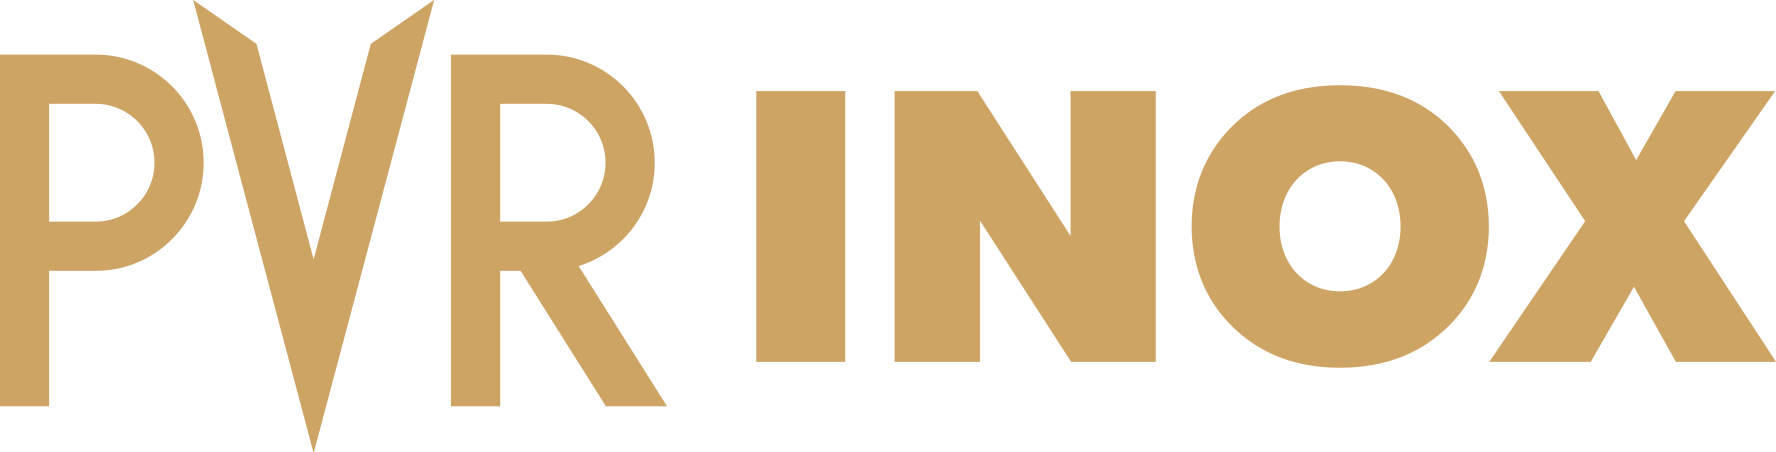 PVR Inox Pictures Logo